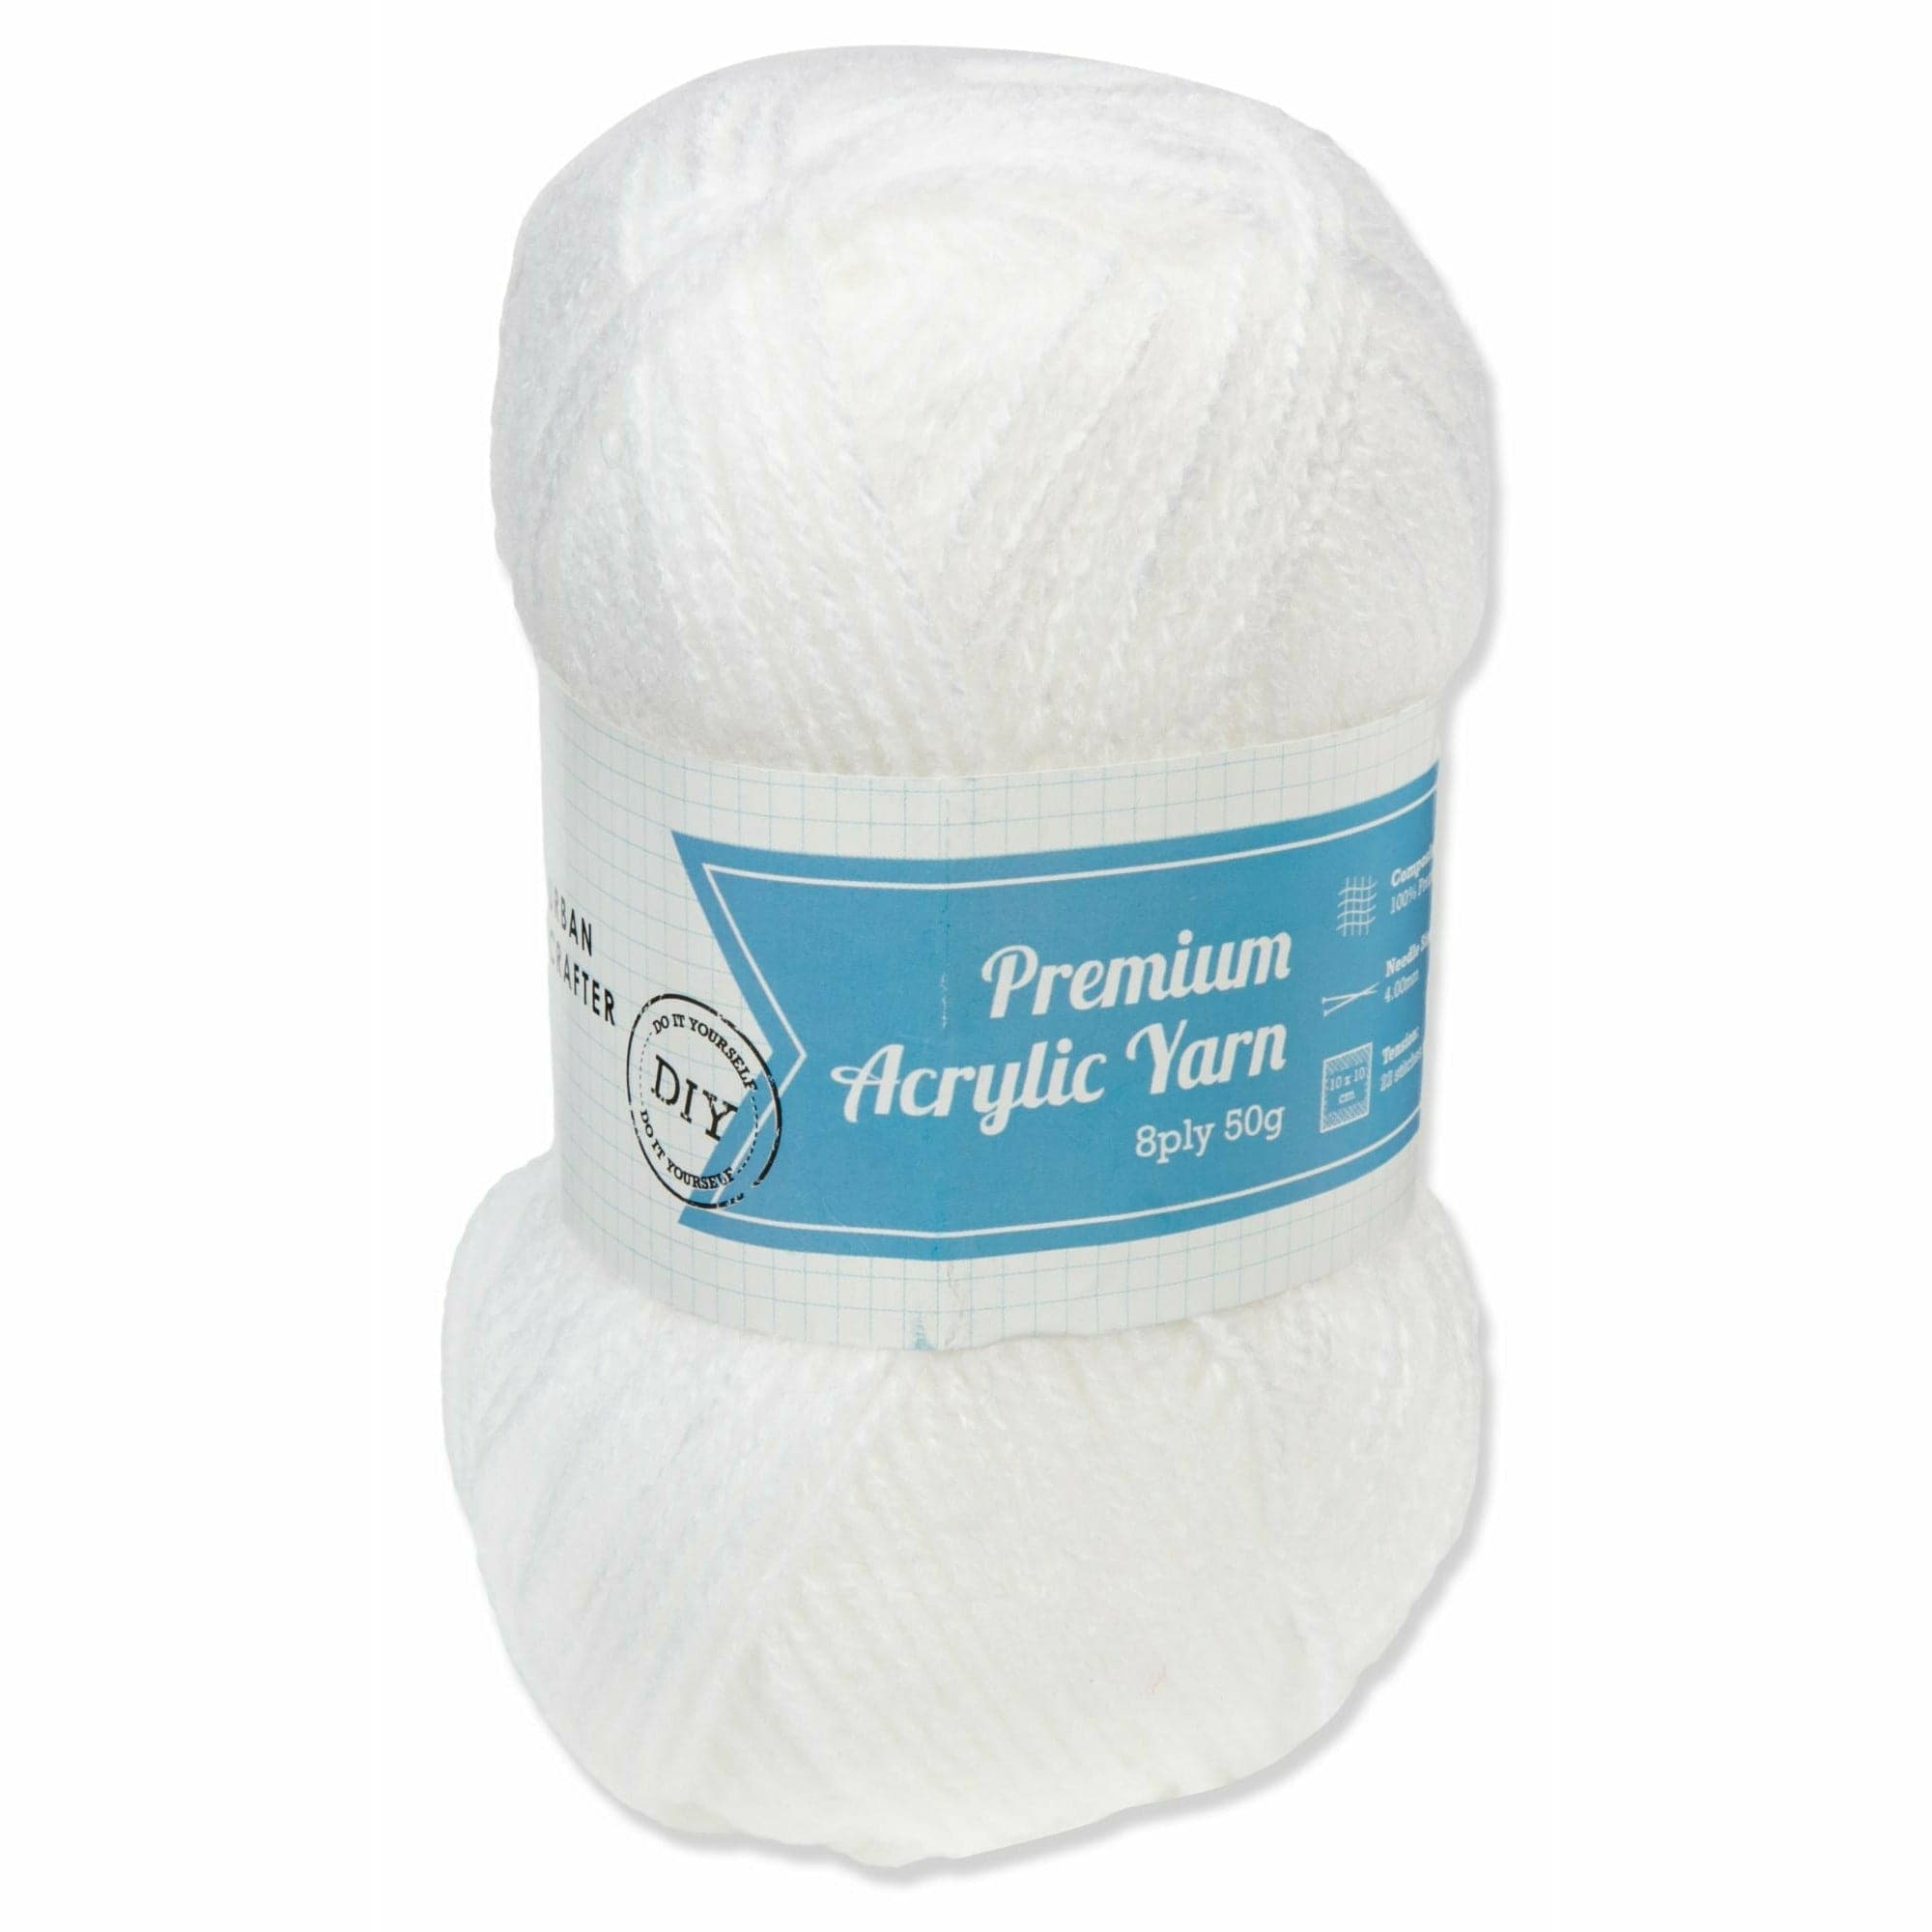 Image of Urban Crafter 100% Premium Acrylic Yarn-White, 8 Ply 50g